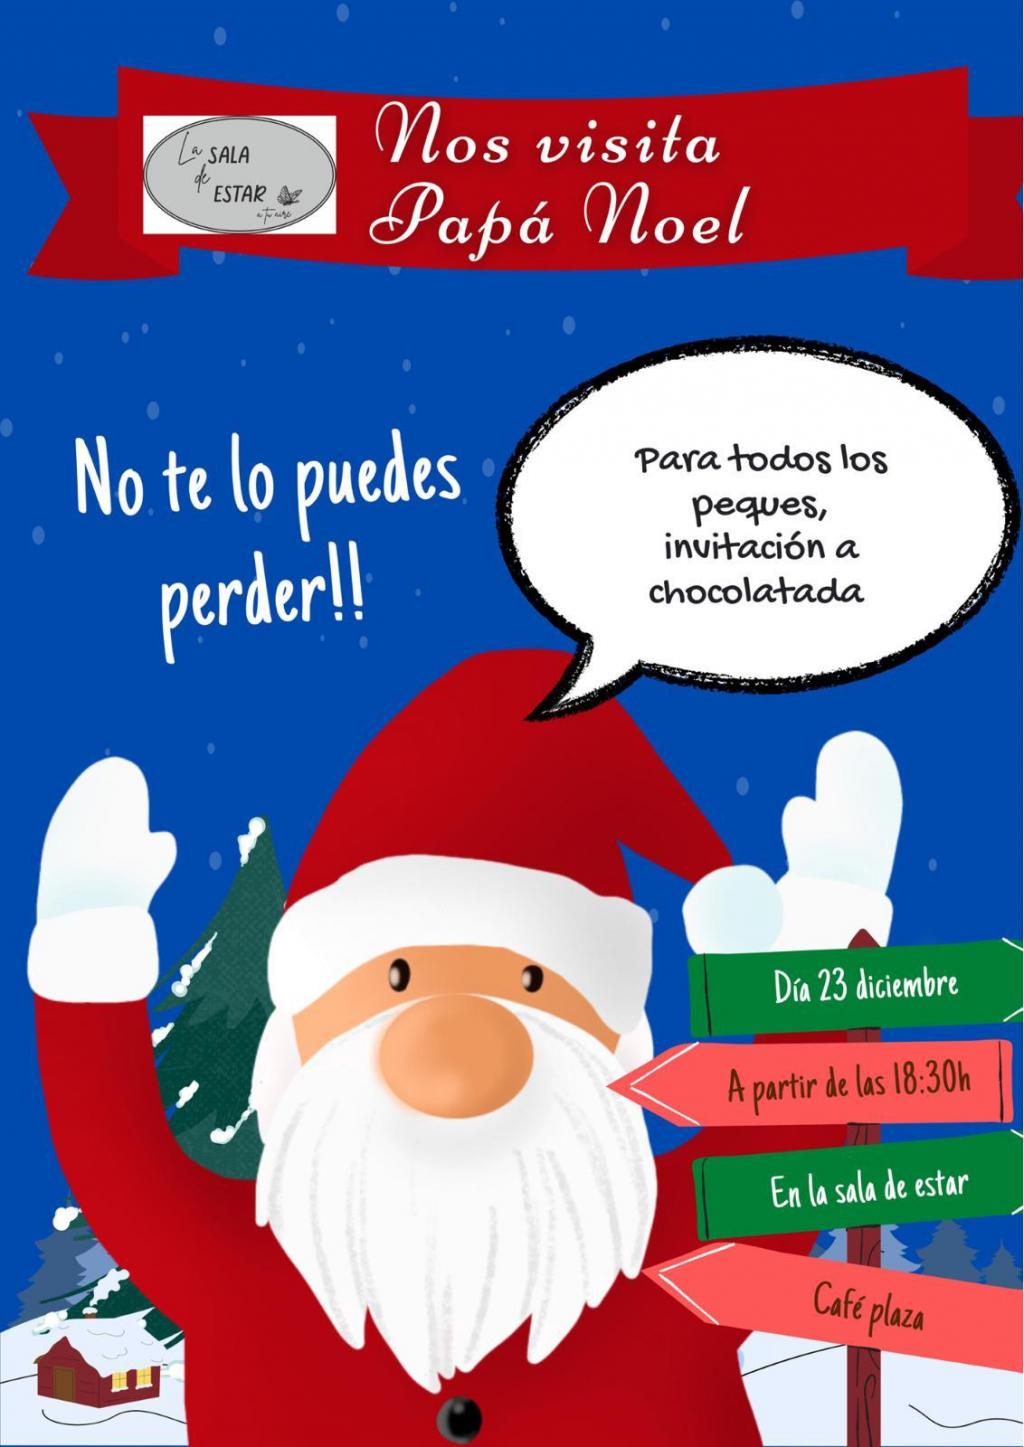 El Tapin - "La Sala de Estar" del Café Plaza recibe hoy, 23 de diciembre, la visita de Papa Noel